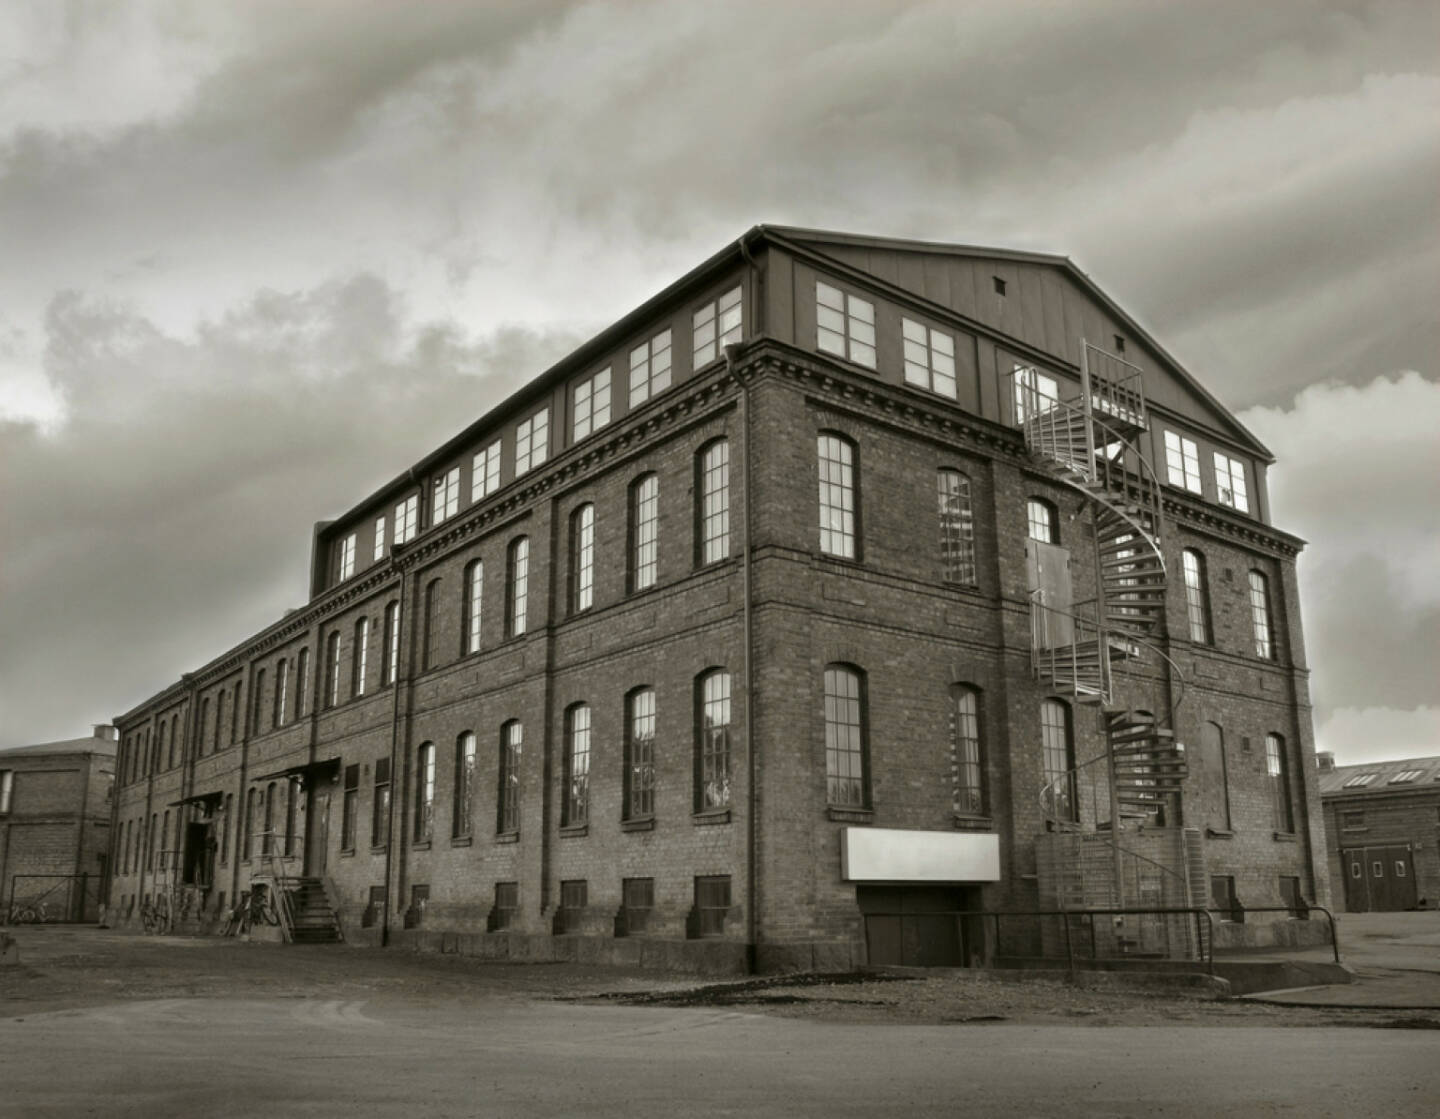 Industrie, Industrieanlage, Gebäude, Fabrik, verlassen, alt, http://www.shutterstock.com/de/pic-90089551/stock-photo-abandoned-factory-building-in-sepia-tone-symbol-for-economic-depressions.html 